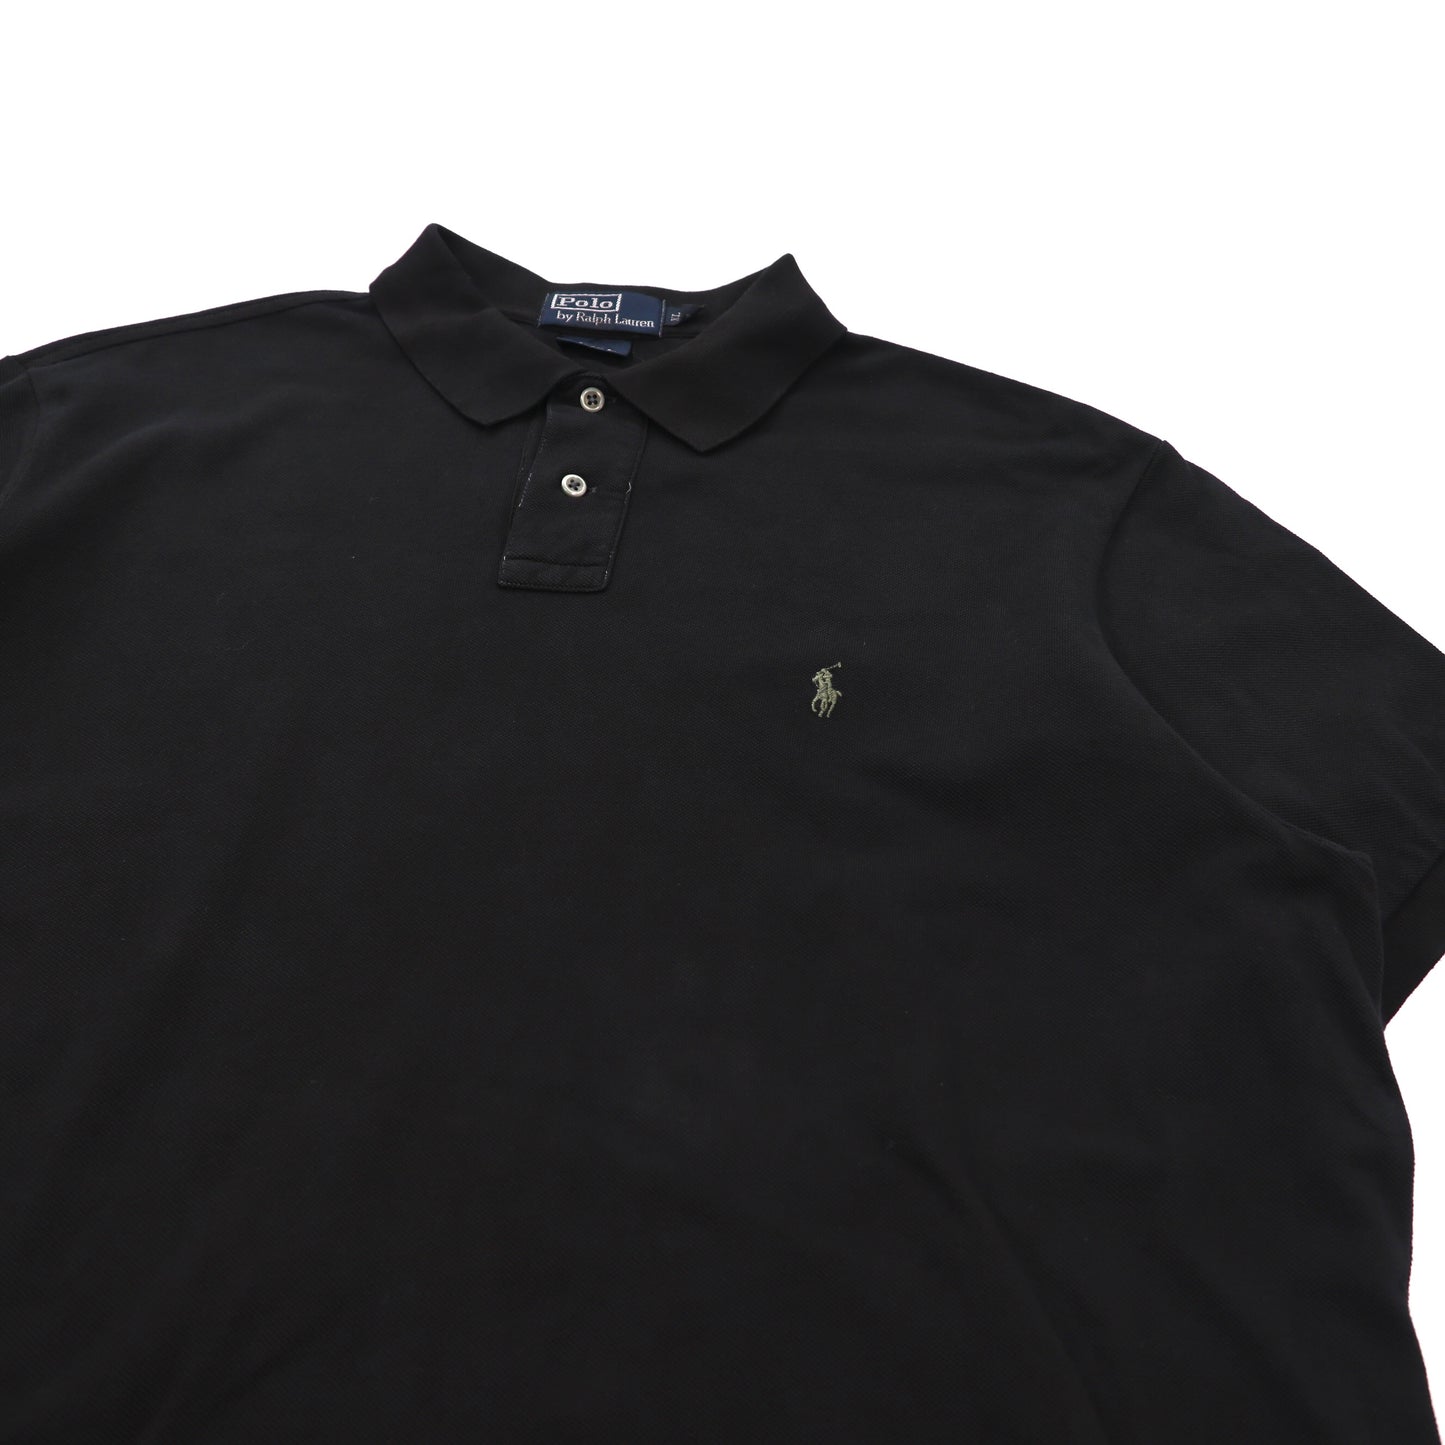 Polo by Ralph Lauren ポロシャツ XL ブラック コットン スモールポニー刺繍 CUSTOM FIT